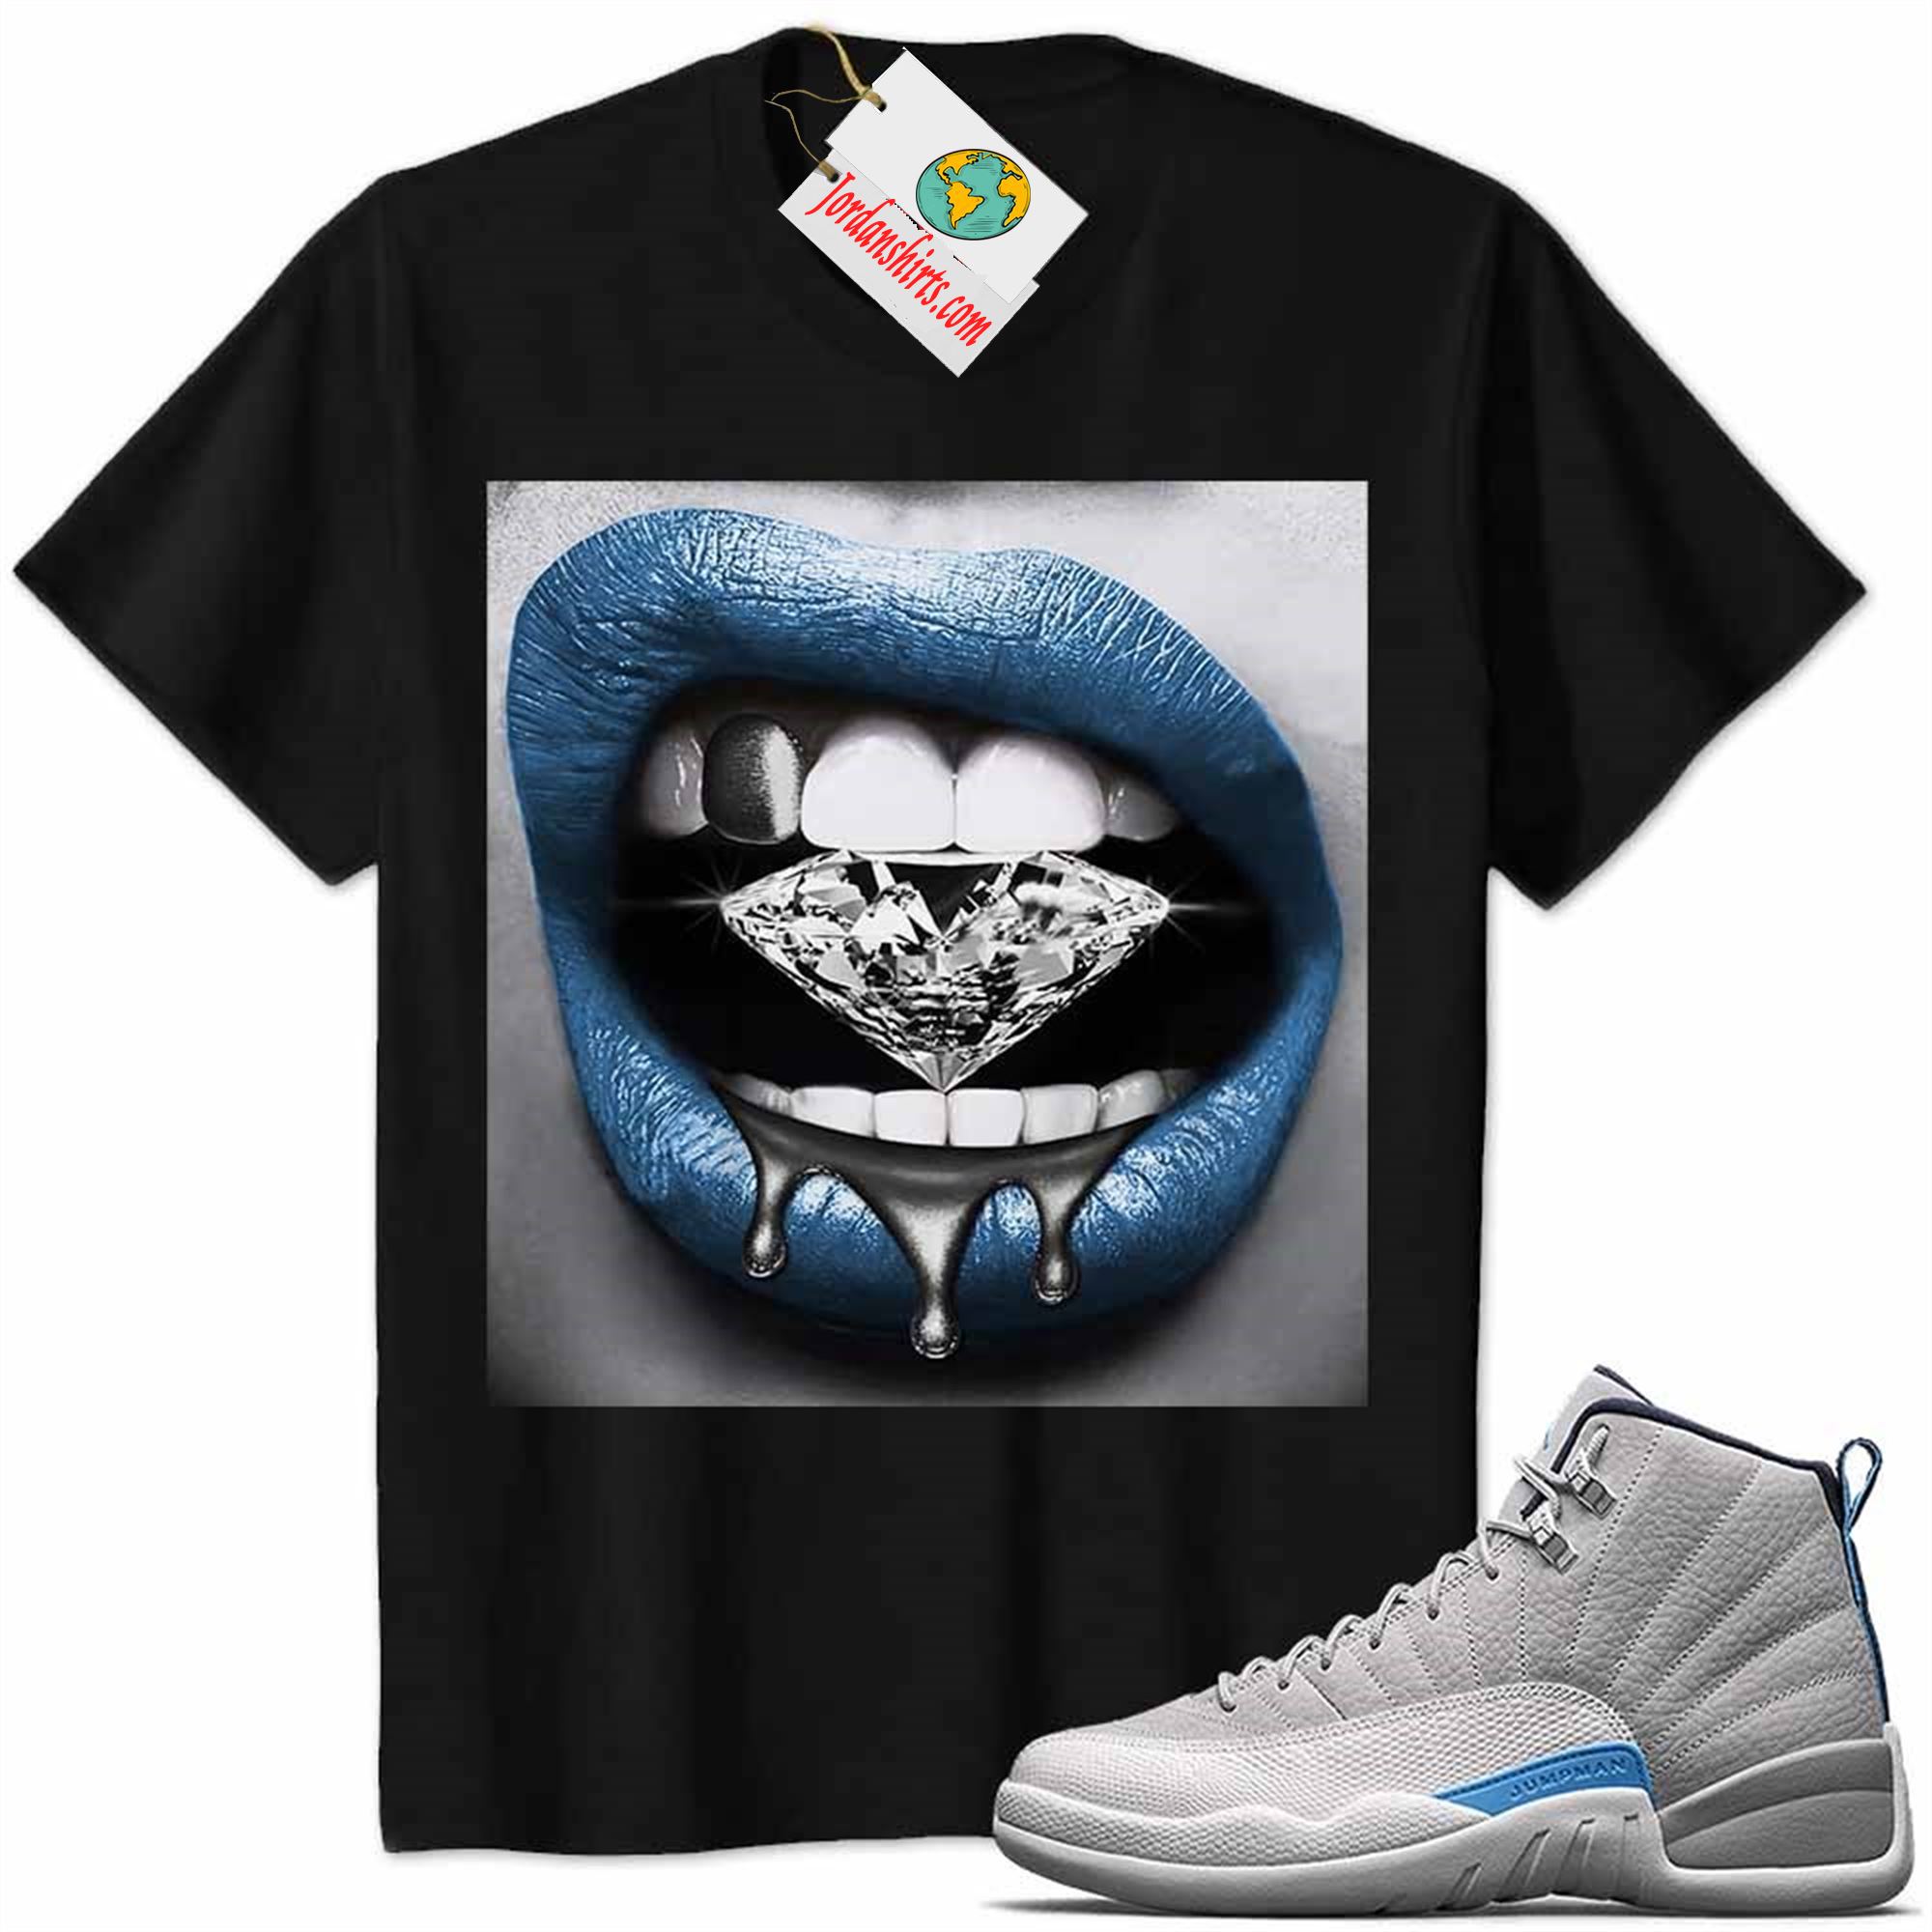 Jordan 12 Shirt, Jordan 12 Wolf Grey Shirt Sexy Lip Bite Diamond Dripping Black Plus Size Up To 5xl